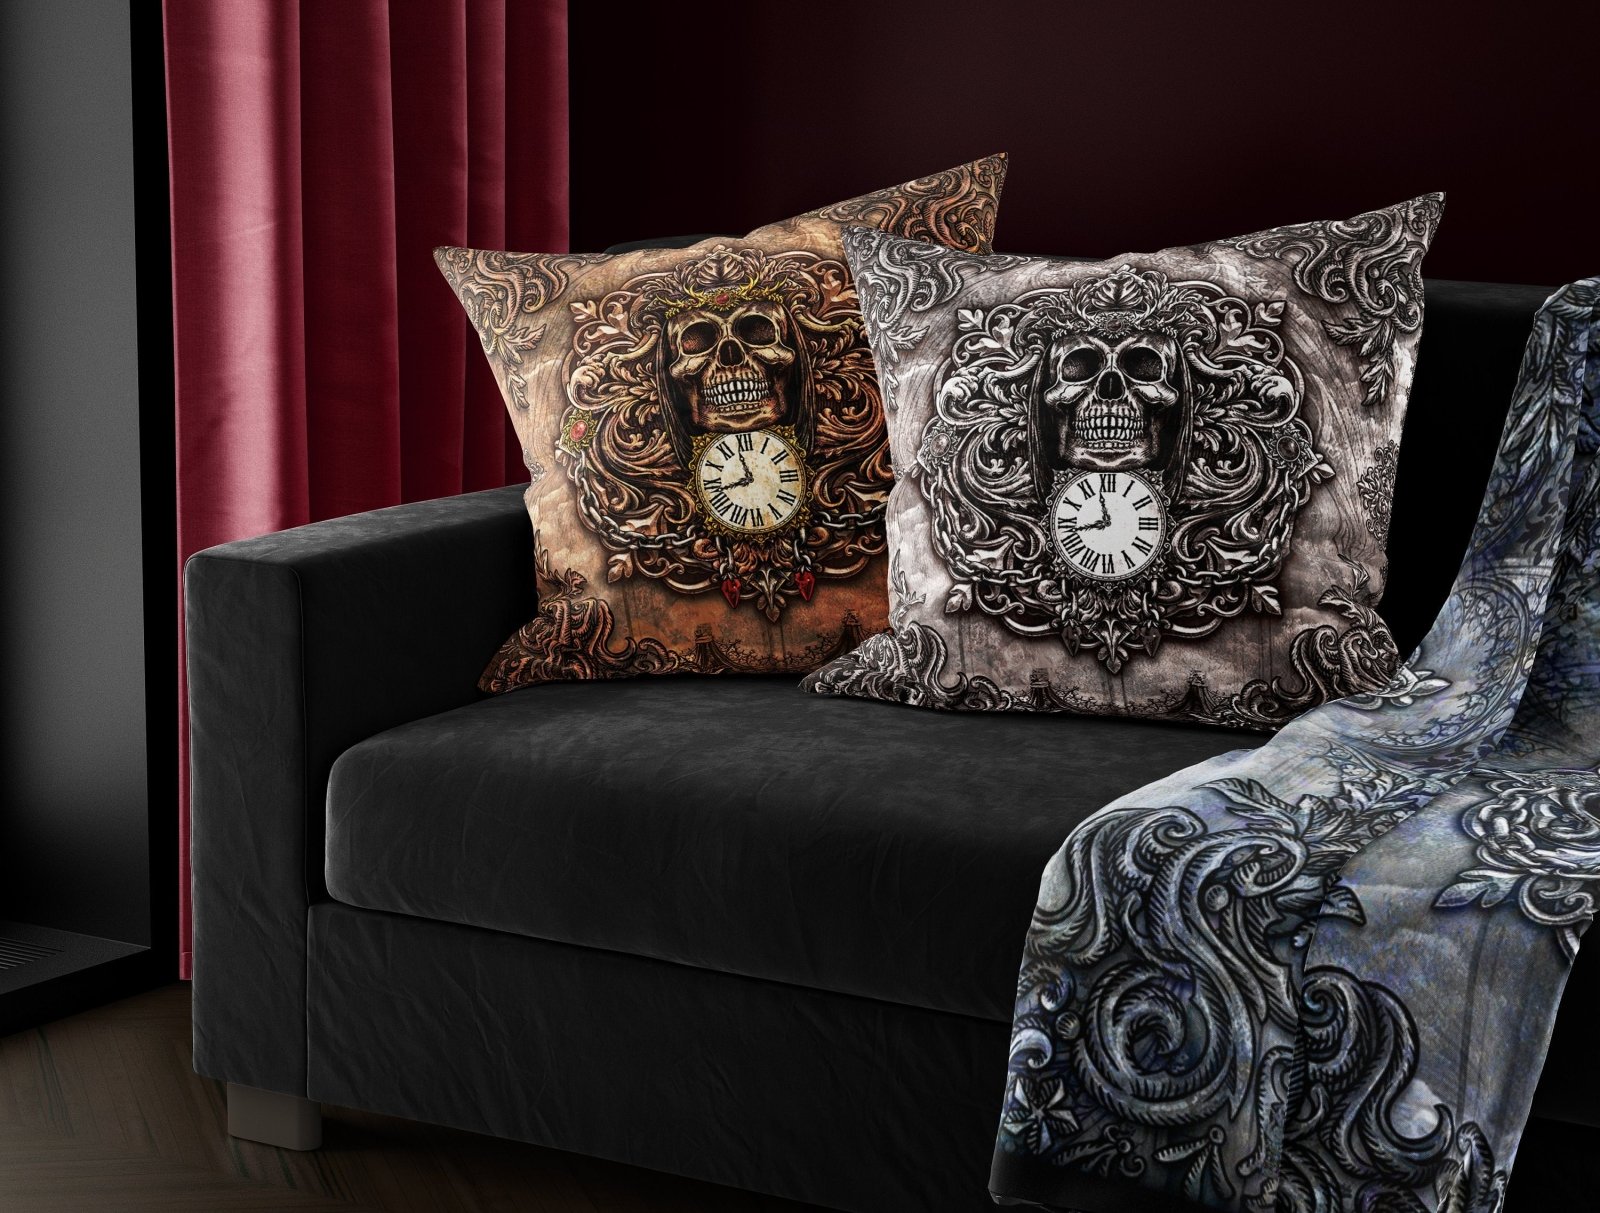 Gothic Throw Pillow, Decorative Accent Cushion, Grim Reaper, Memeto Mori, Skull Art, Goth Room Decor, Alternative Home - 3 Colors - Abysm Internal